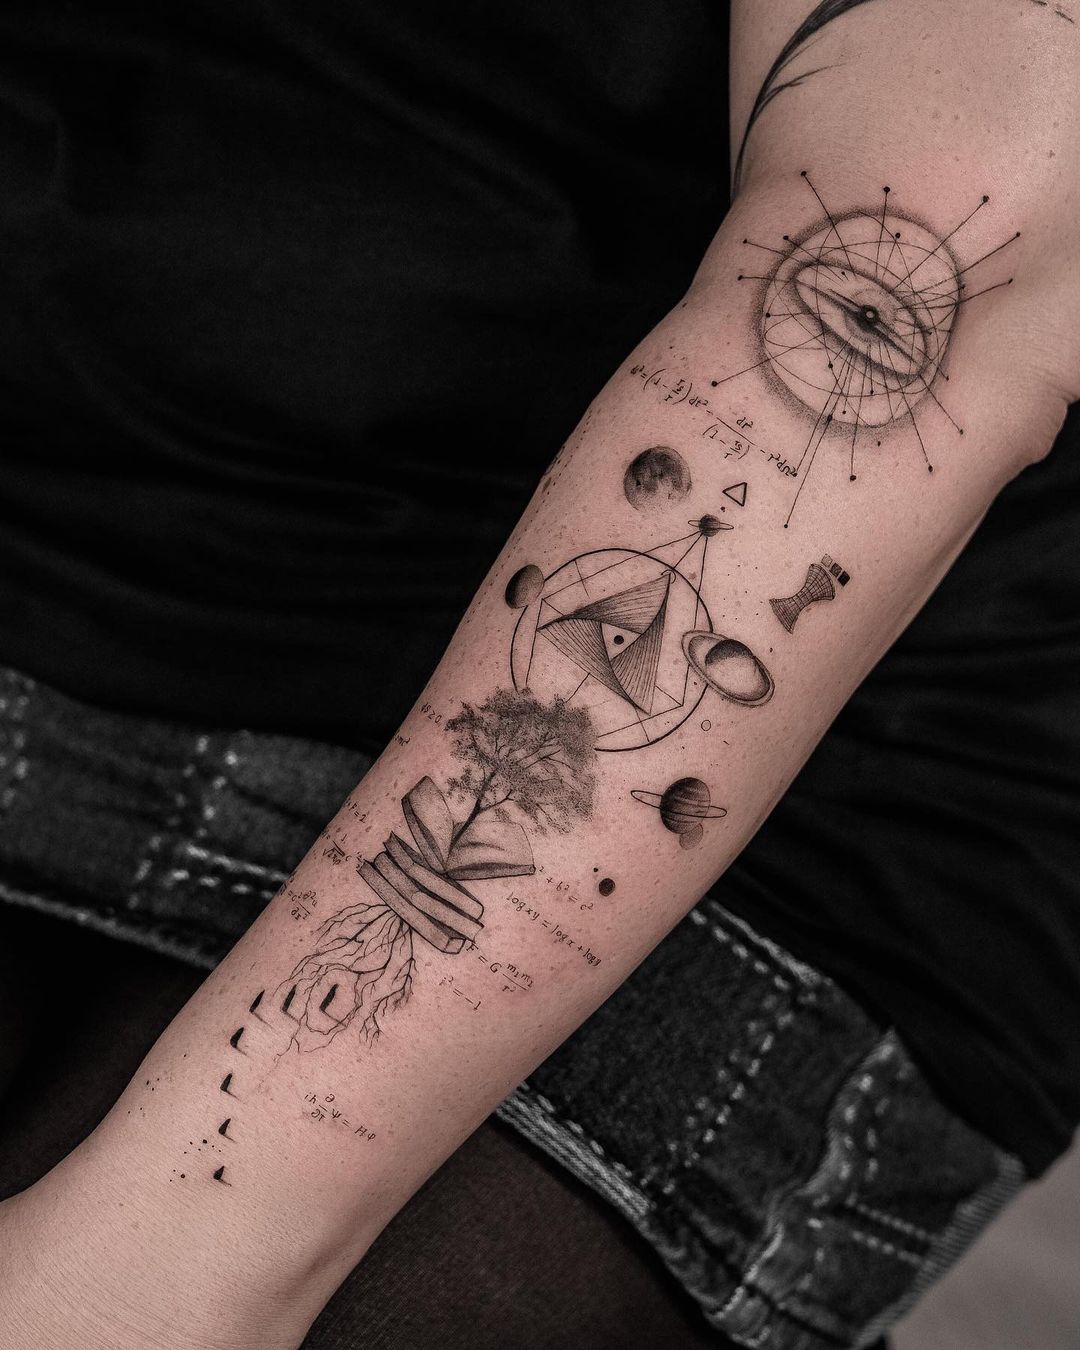 Geometric tattoo ideas by ink.carlow